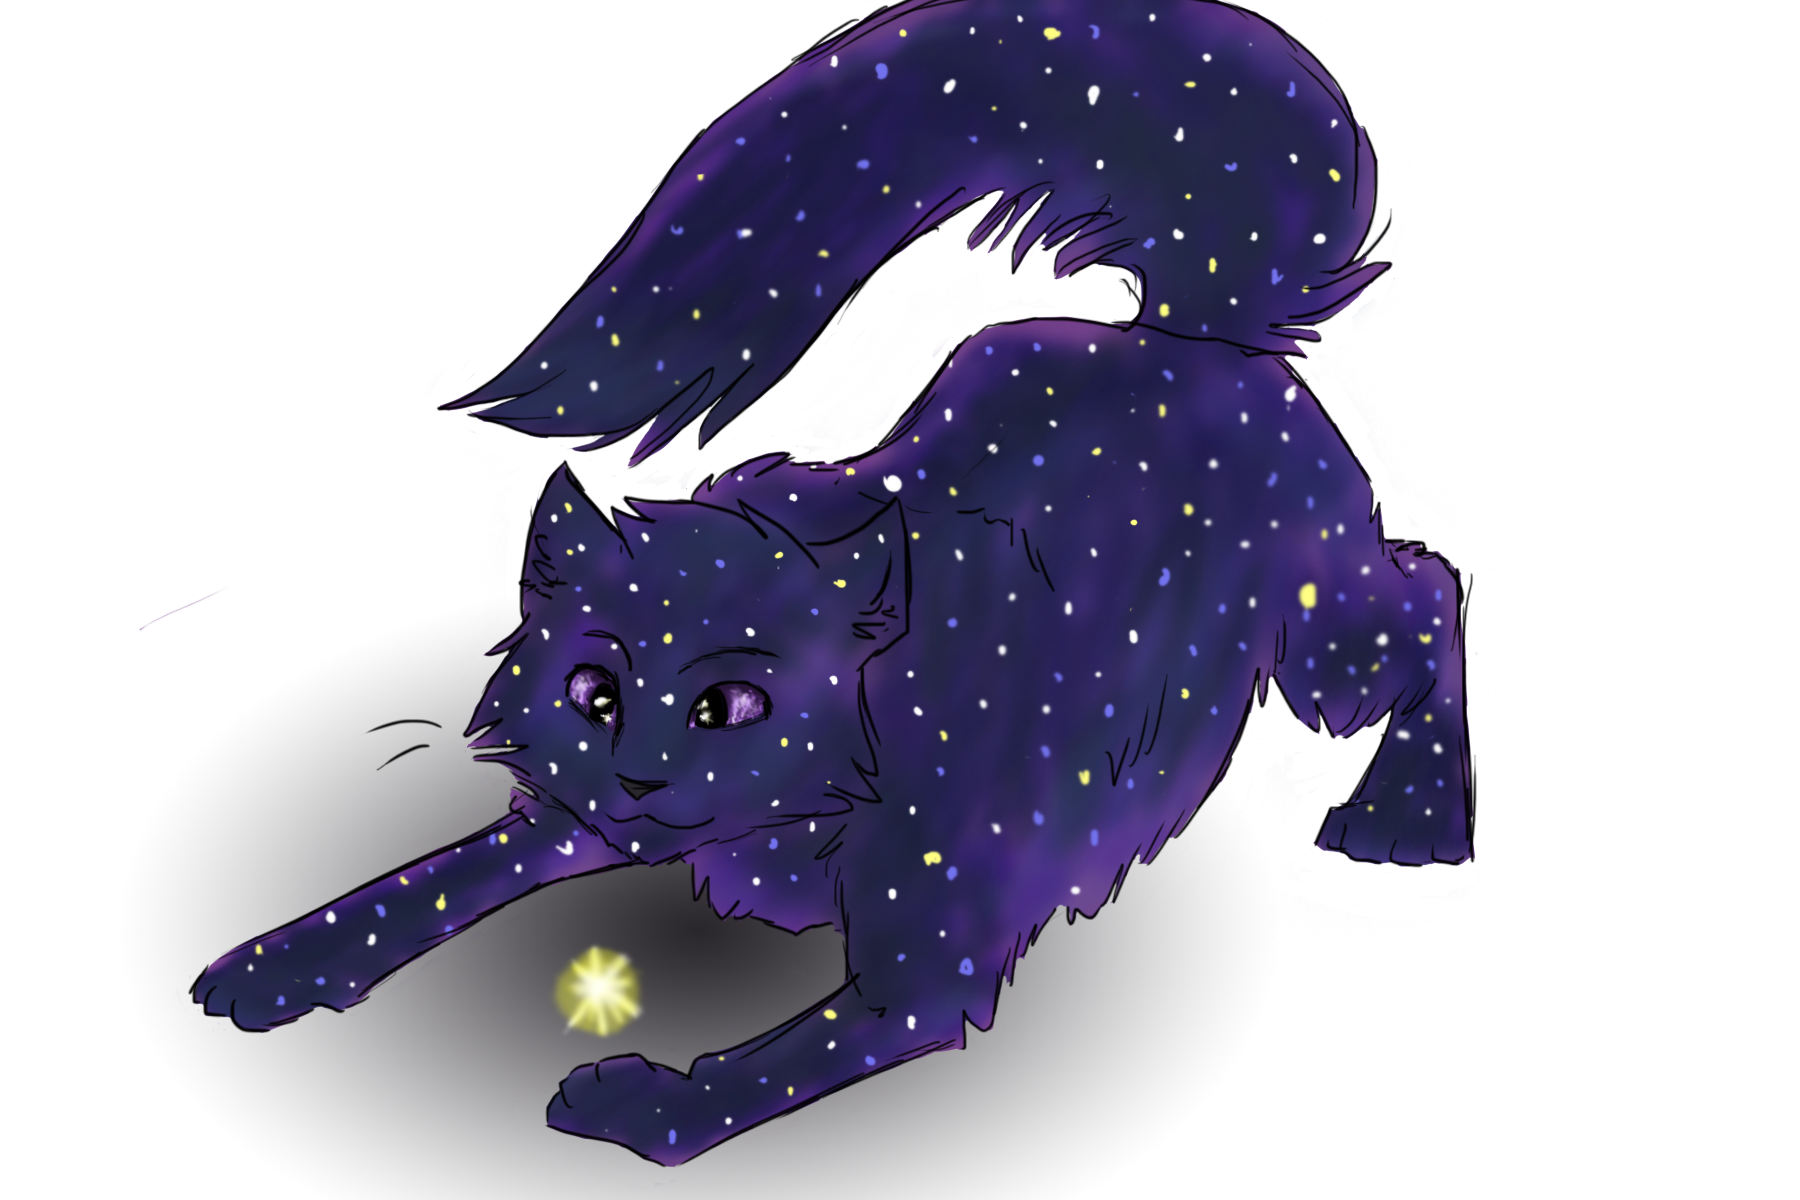 Galaxy Cat by HillDust124 on DeviantArt